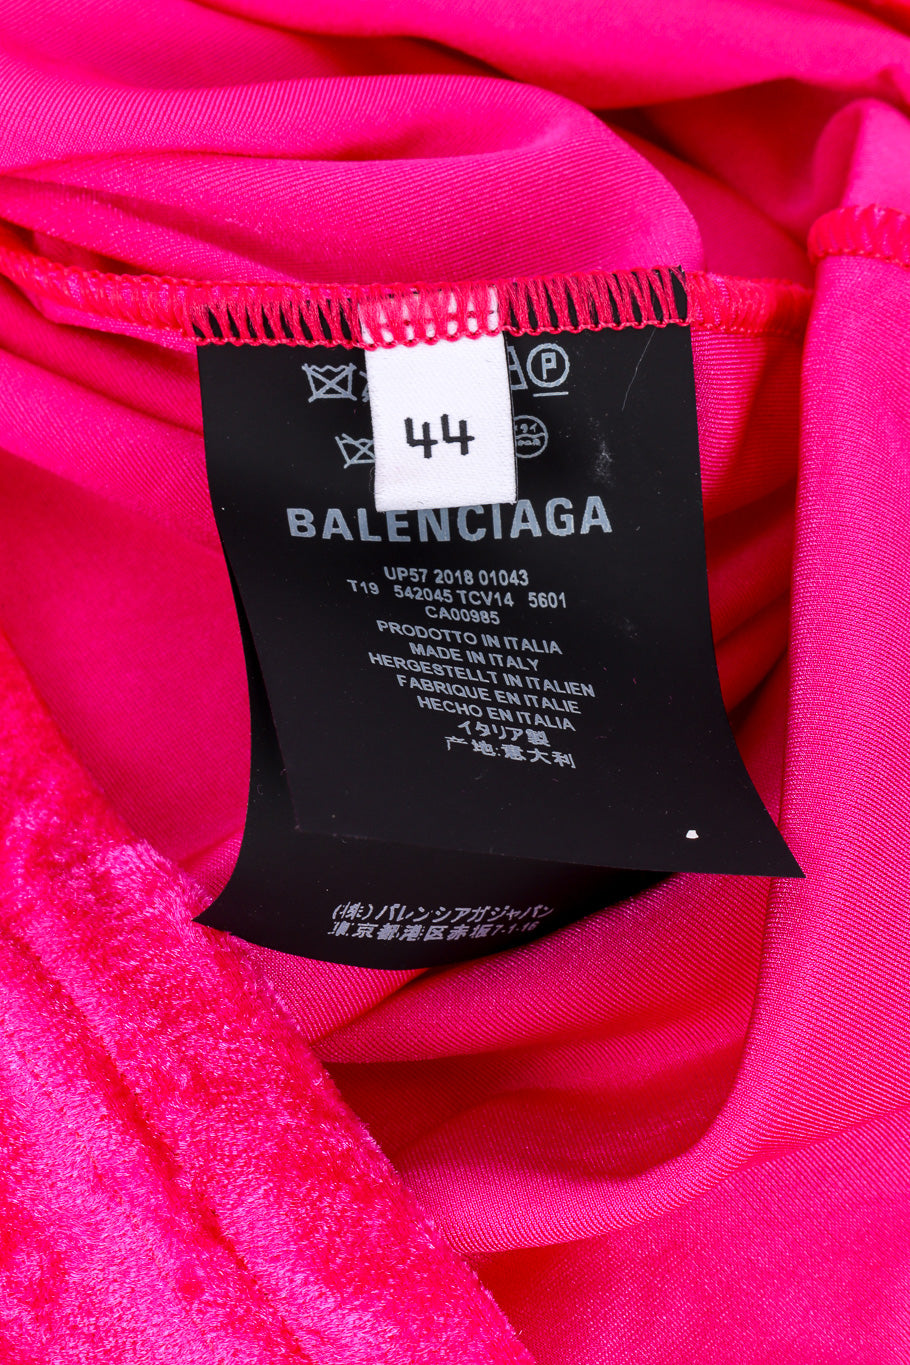 Balenciaga Velvet Turtleneck with Gloves size tag and fabric content label closeup @Recessla